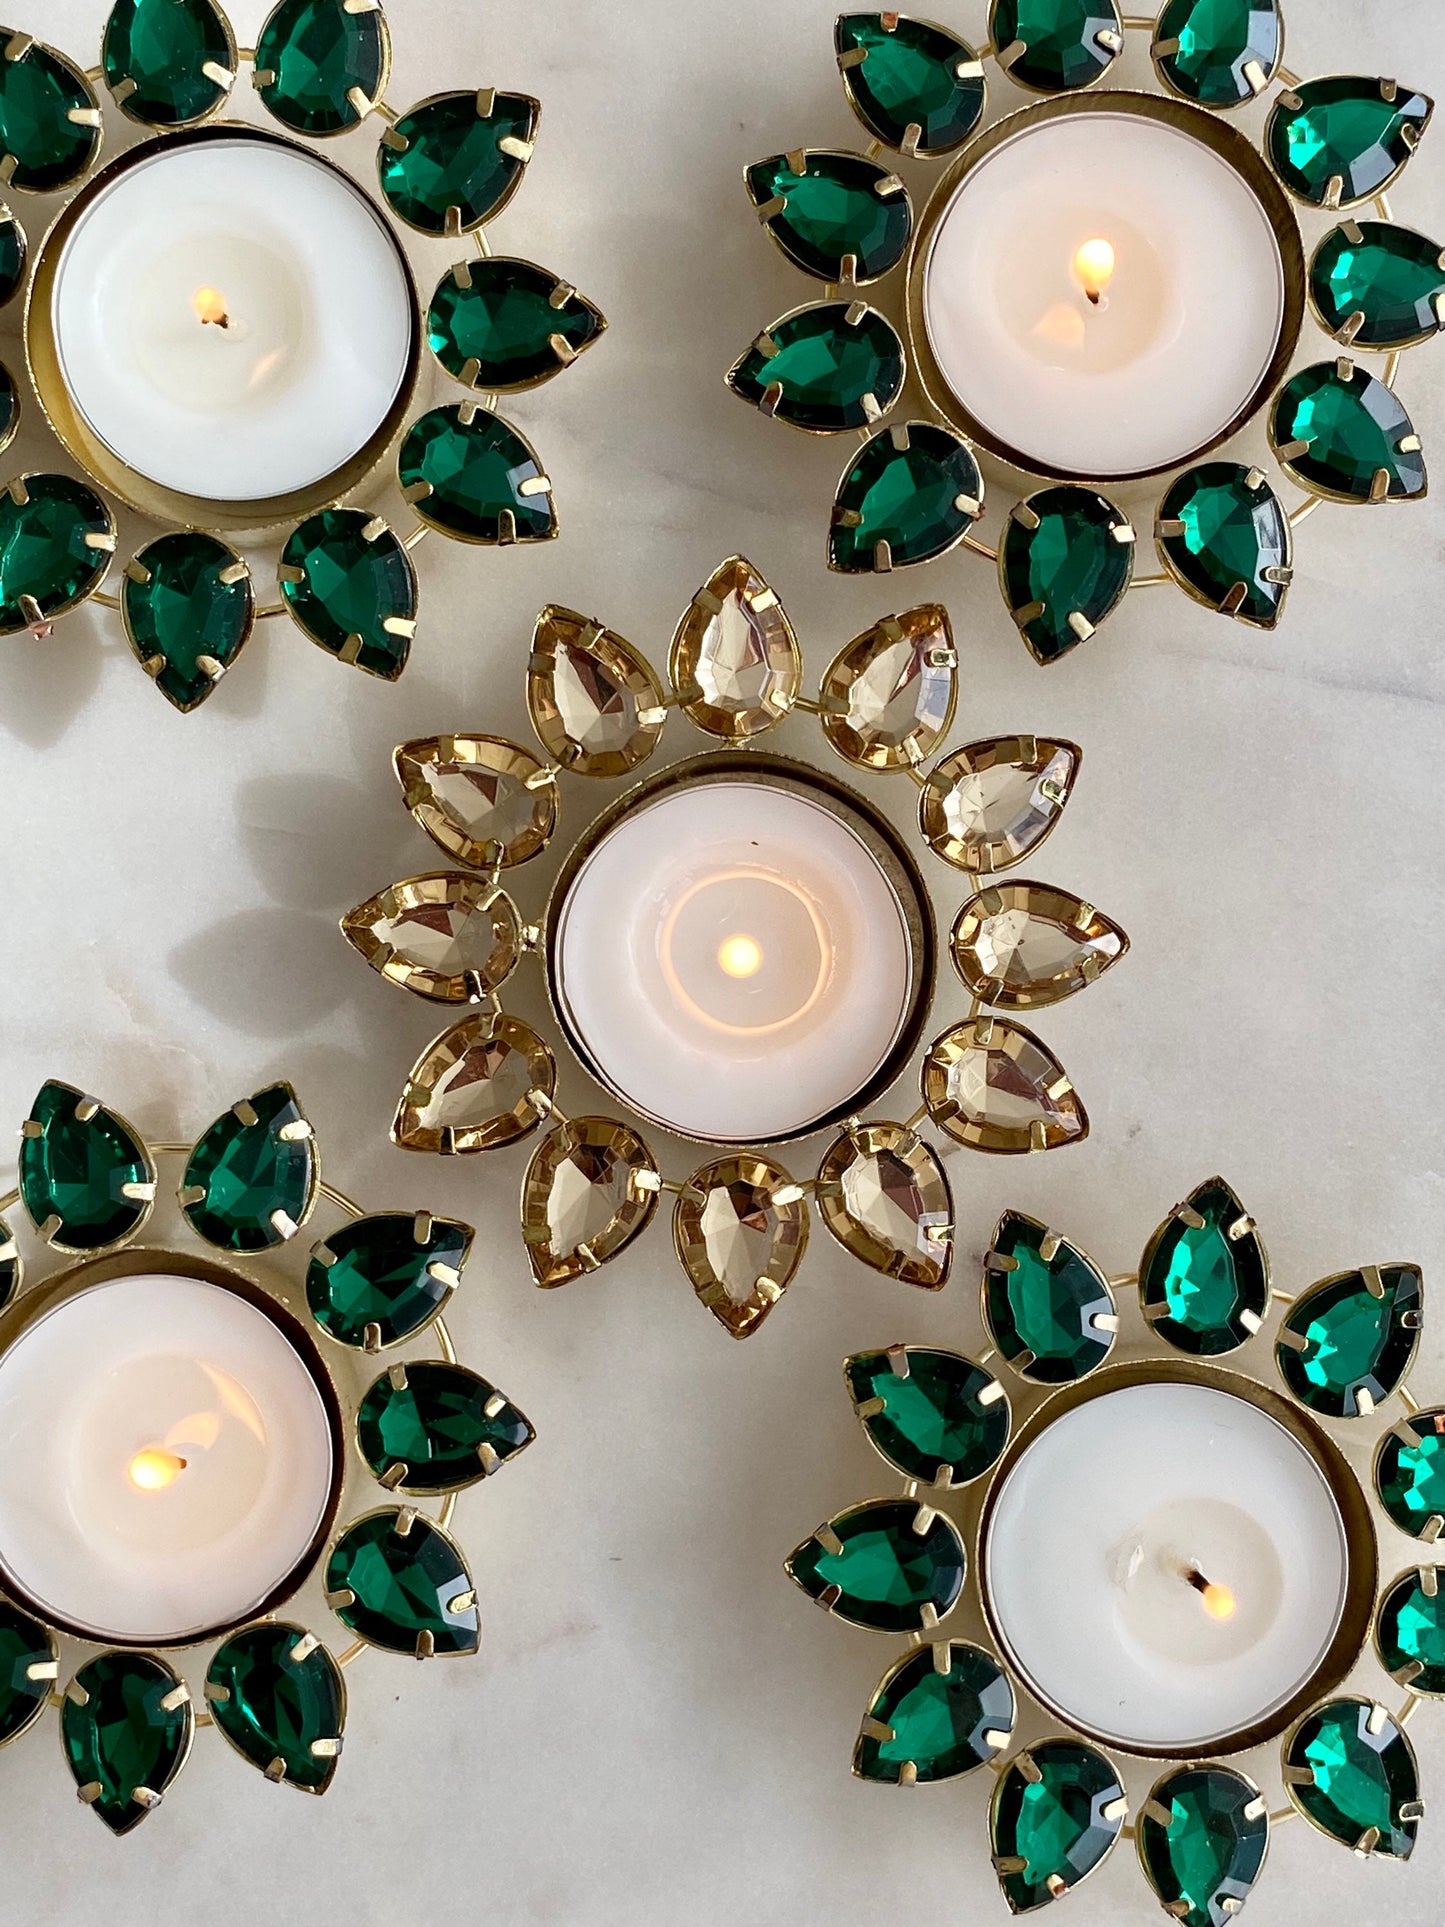 12 x Diwali, Deepawali Tea-light Candles Holder, Metal Crystals Diyas, Diva, Deeya,for Gifting Home Decor, House-Warming, Dholki